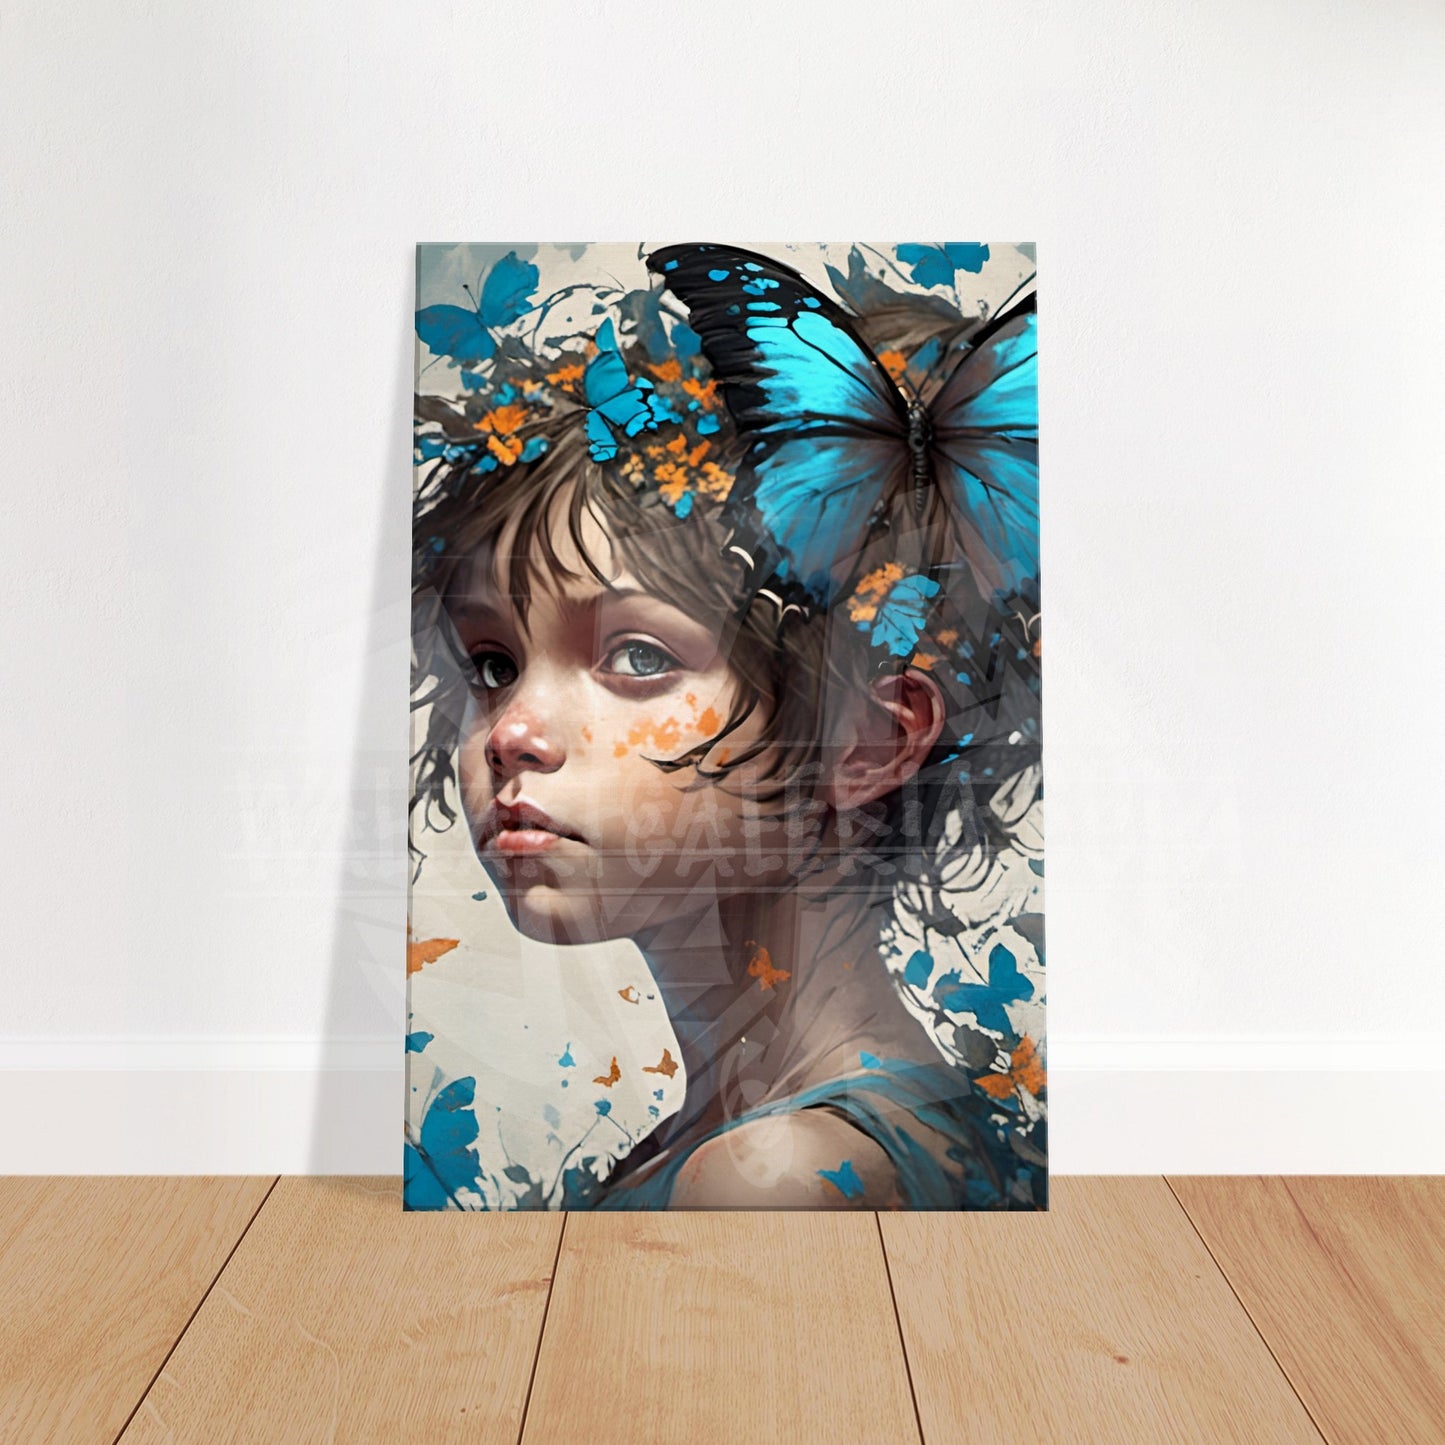 "Enchanted Dreams: Sweet Boy Amidst Fantasy Butterflies" 2D digital Art Canvas Art